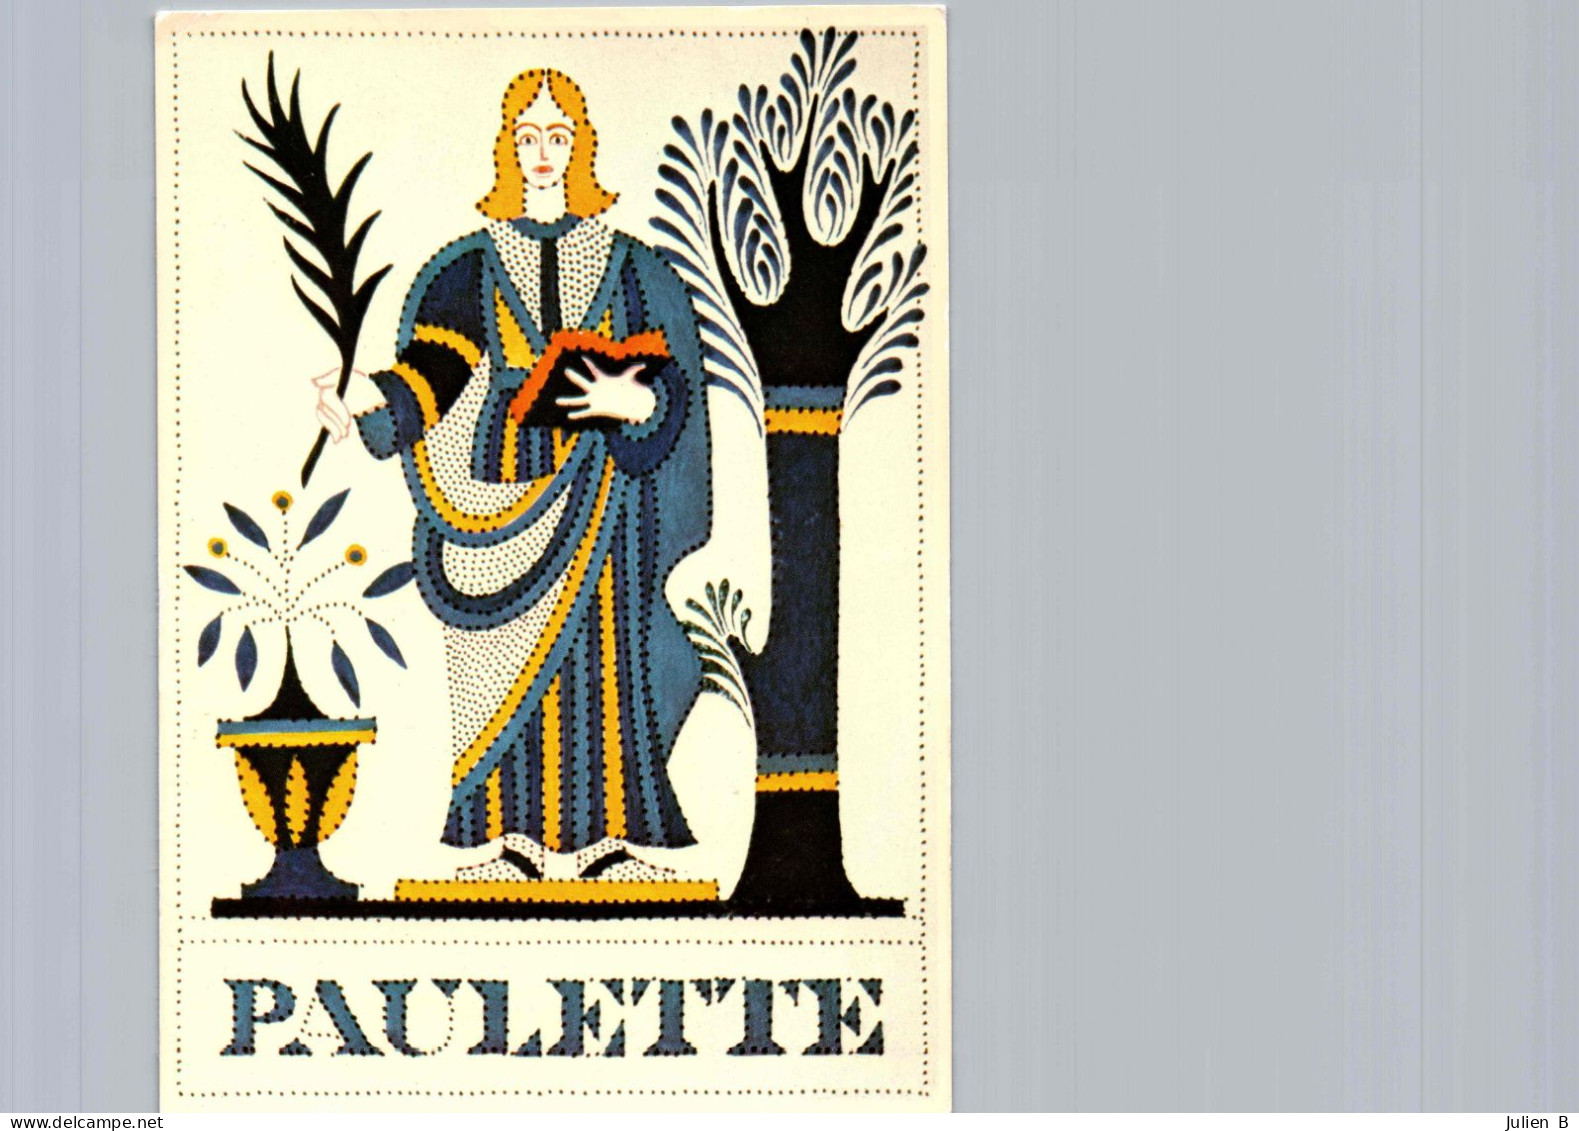 Paulette, Edition Betula - Voornamen